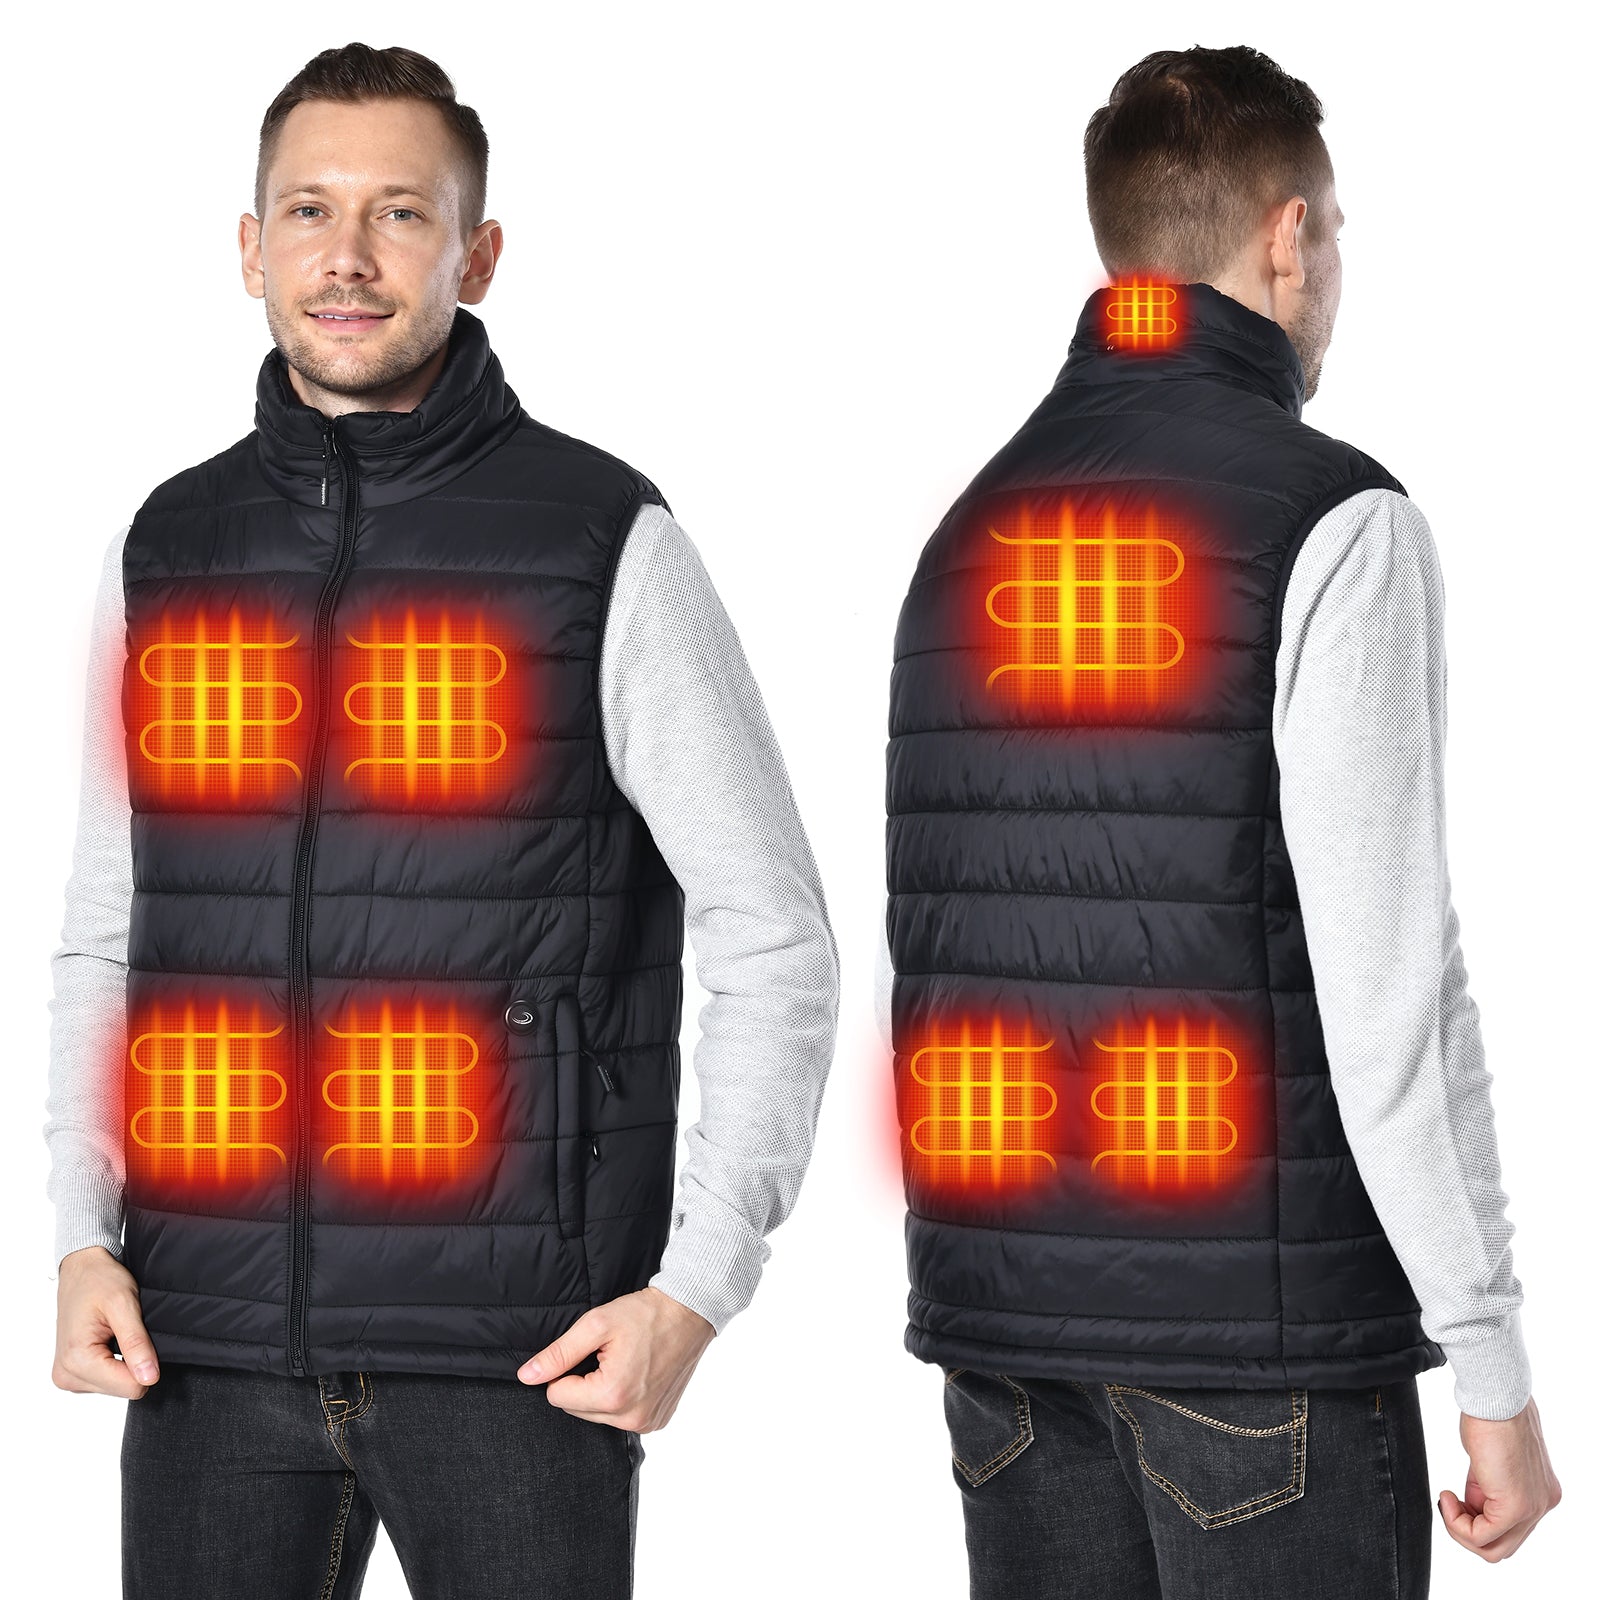 2023 uupalee Heated Vest Outdoor Lightweight Warm Heating Clothing